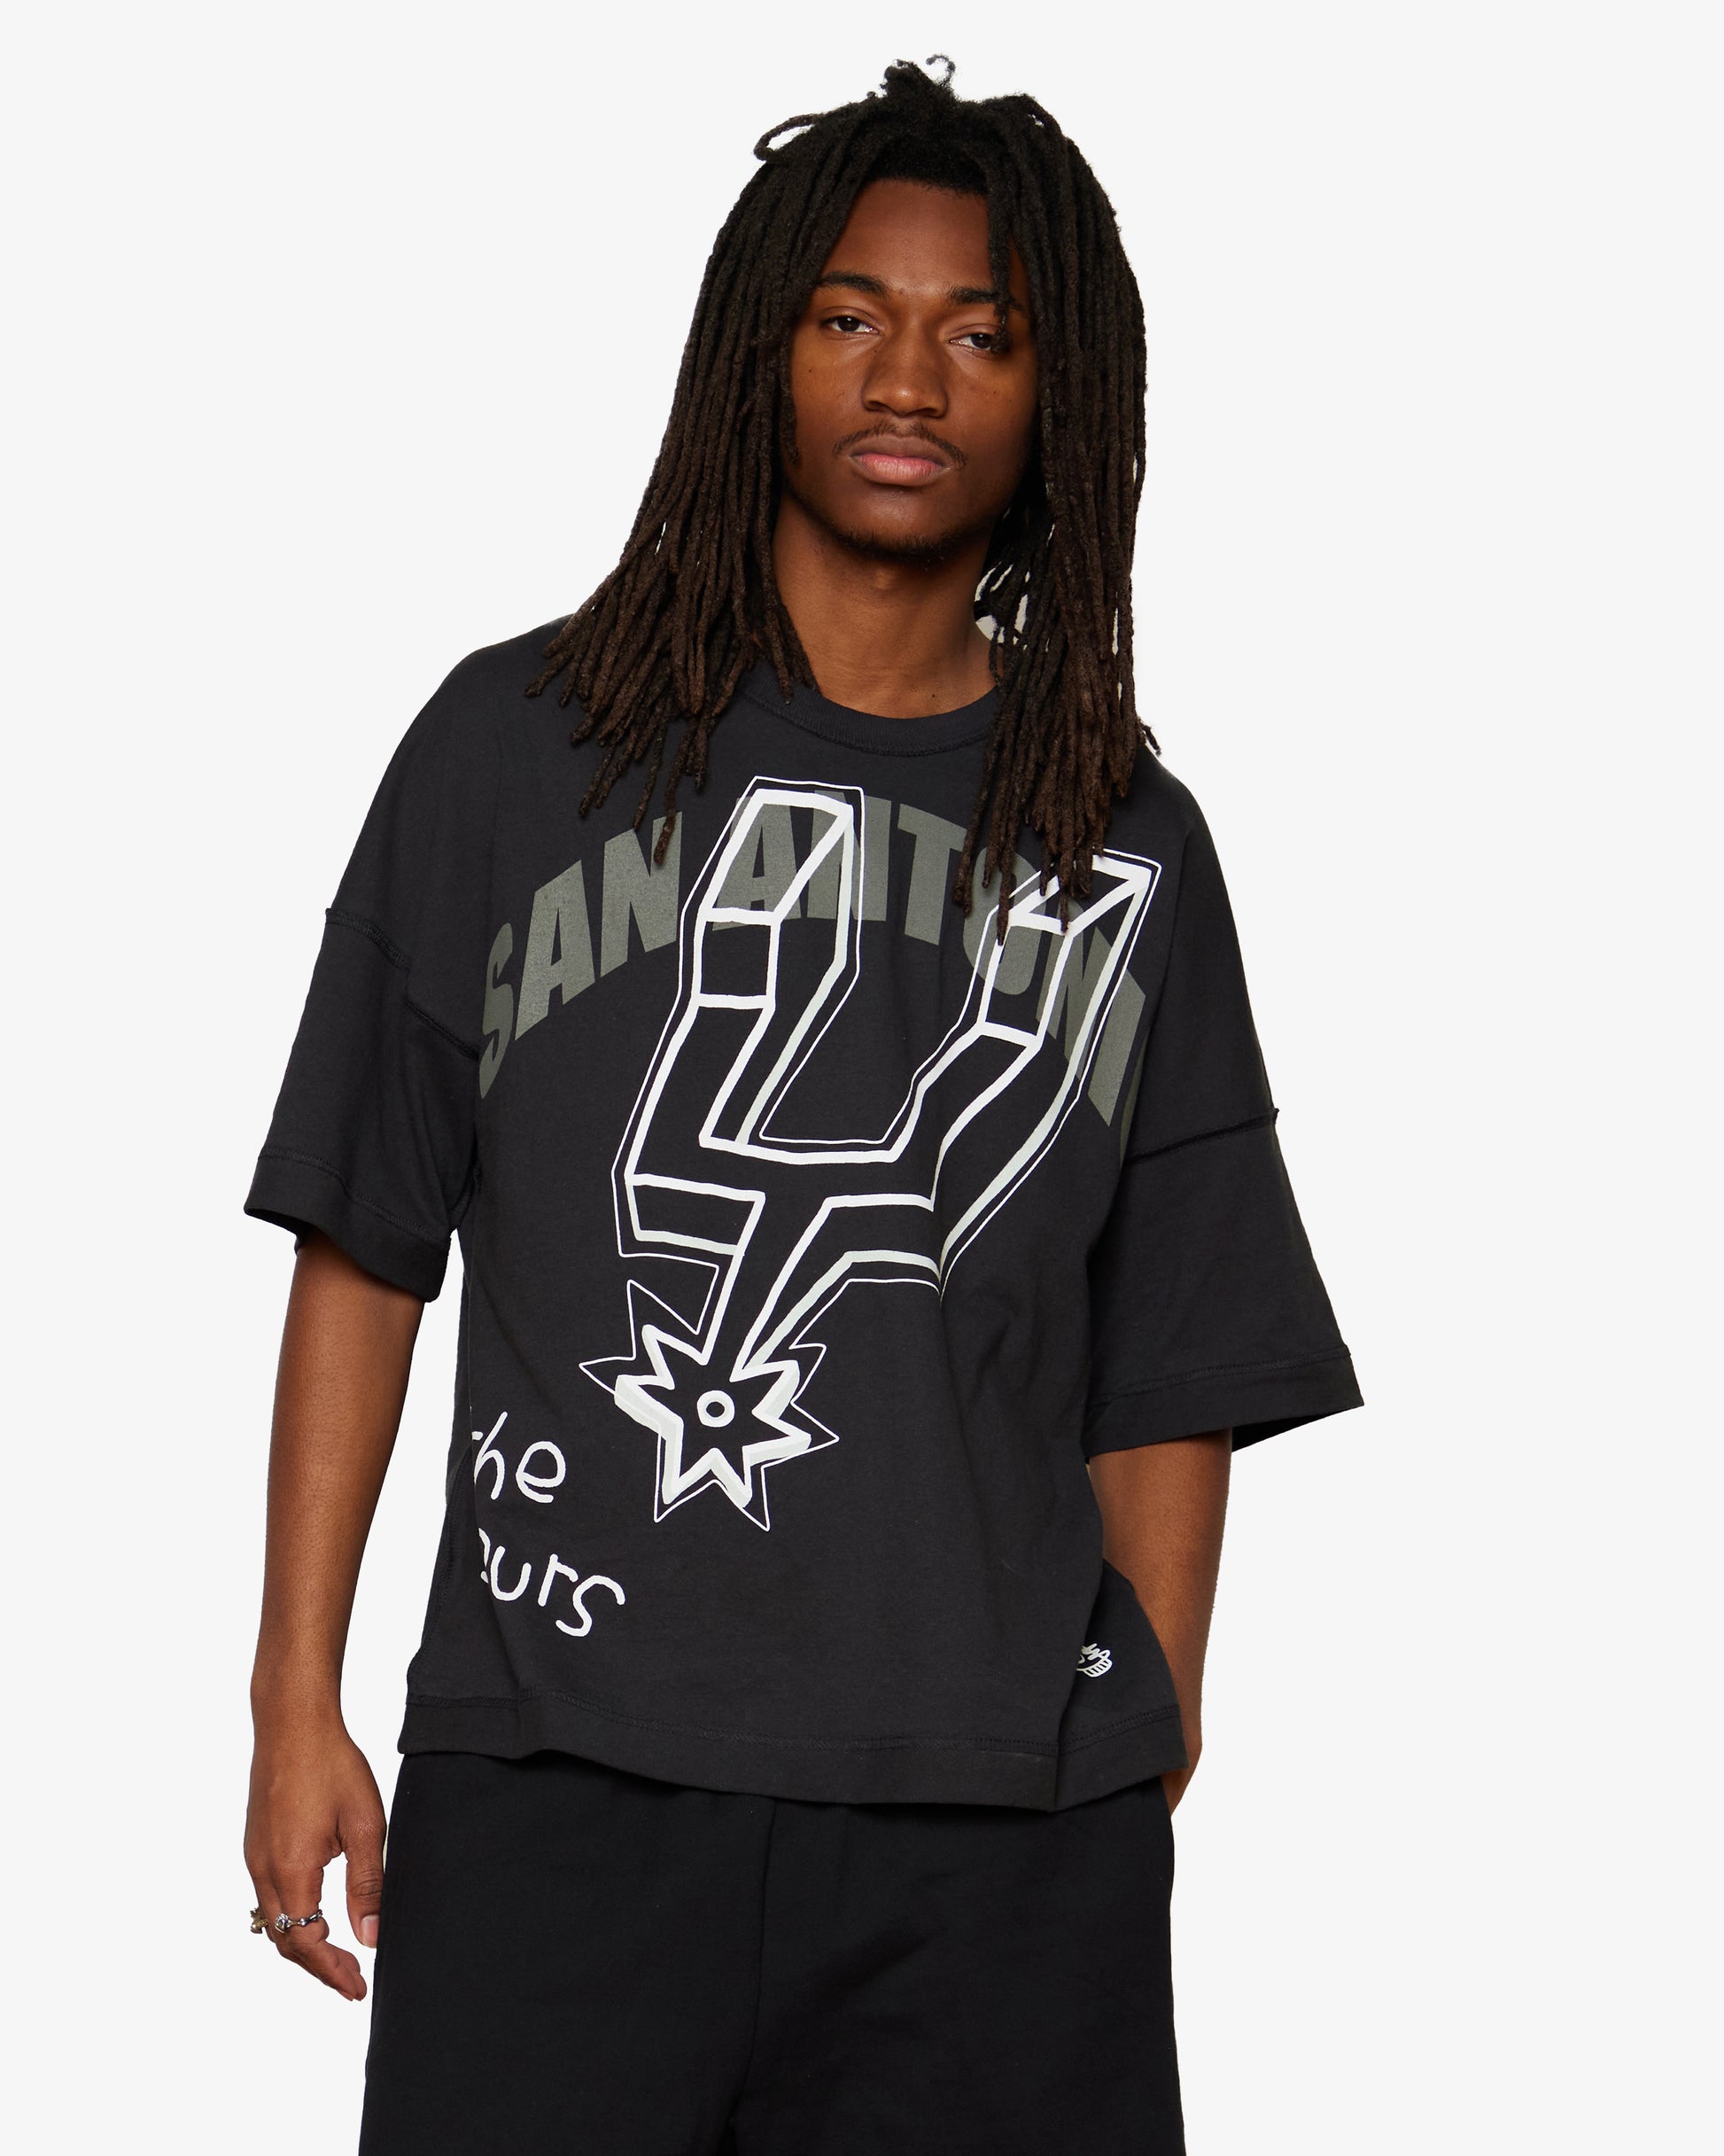 San Antonio Spurs Shirts, Spurs T-Shirt, Tees